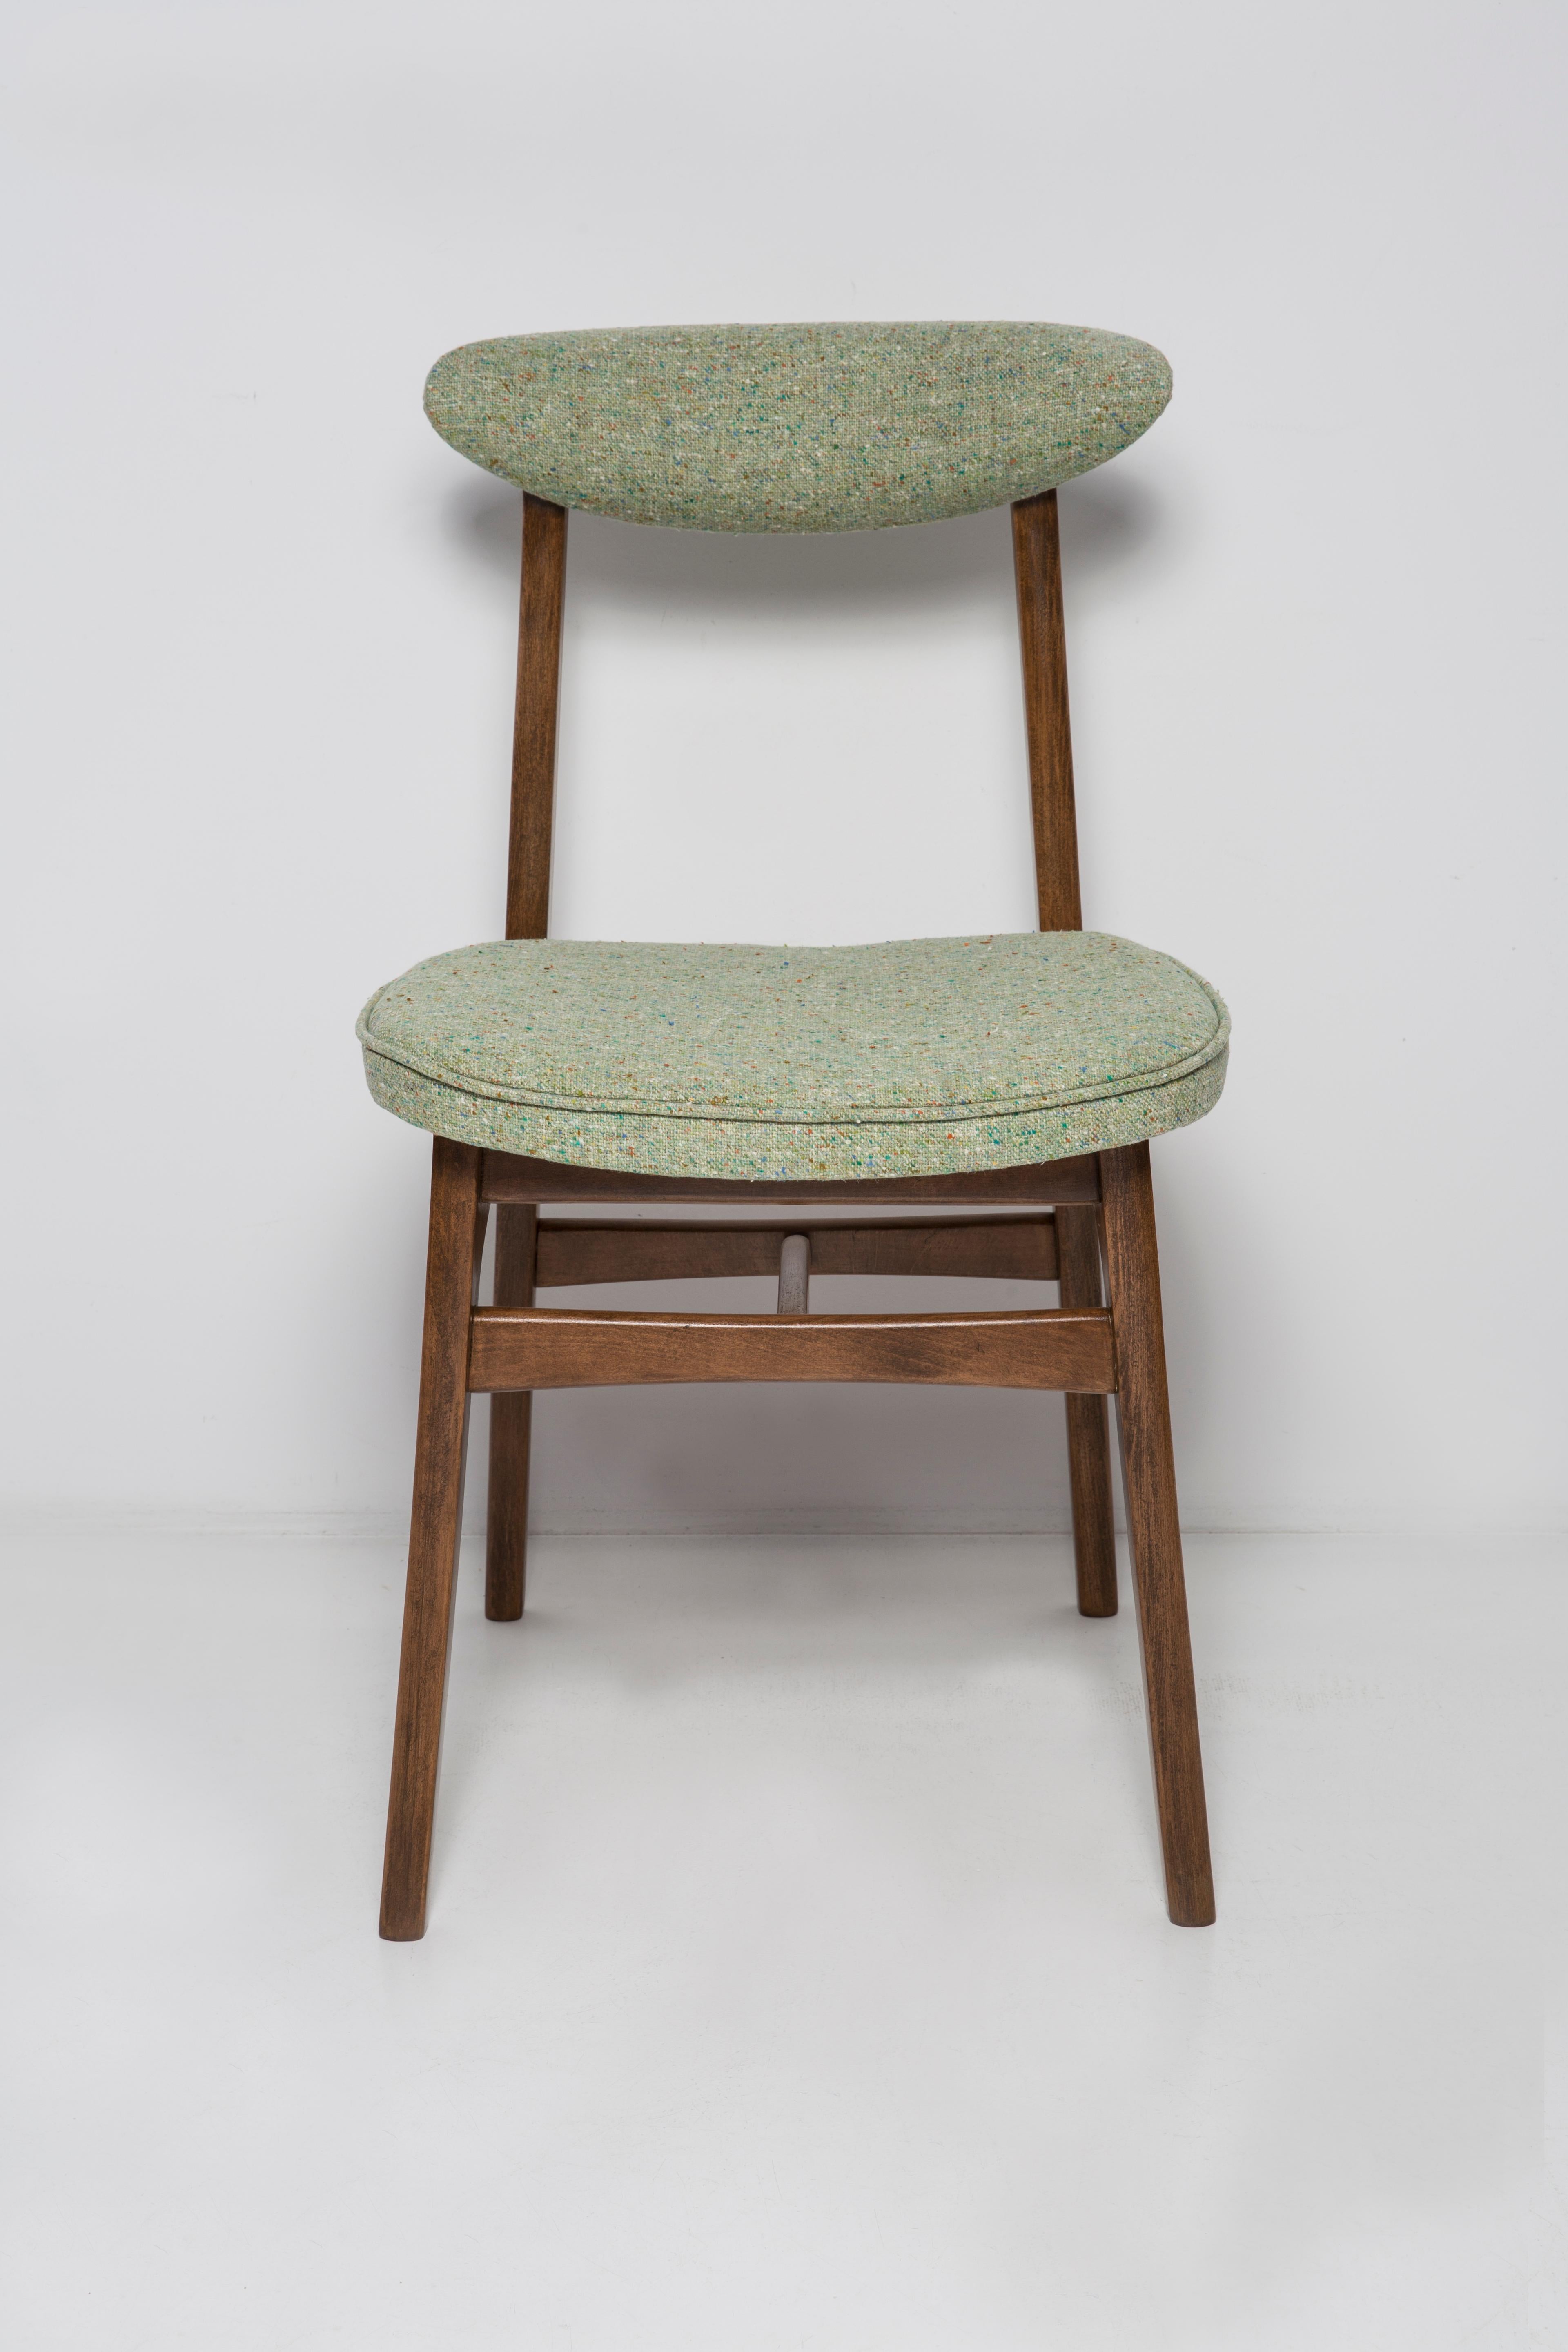 Polish Twelve Mid Century Green Wool Chairs, Walnut Wood, Rajmund Halas, Poland, 1960s For Sale